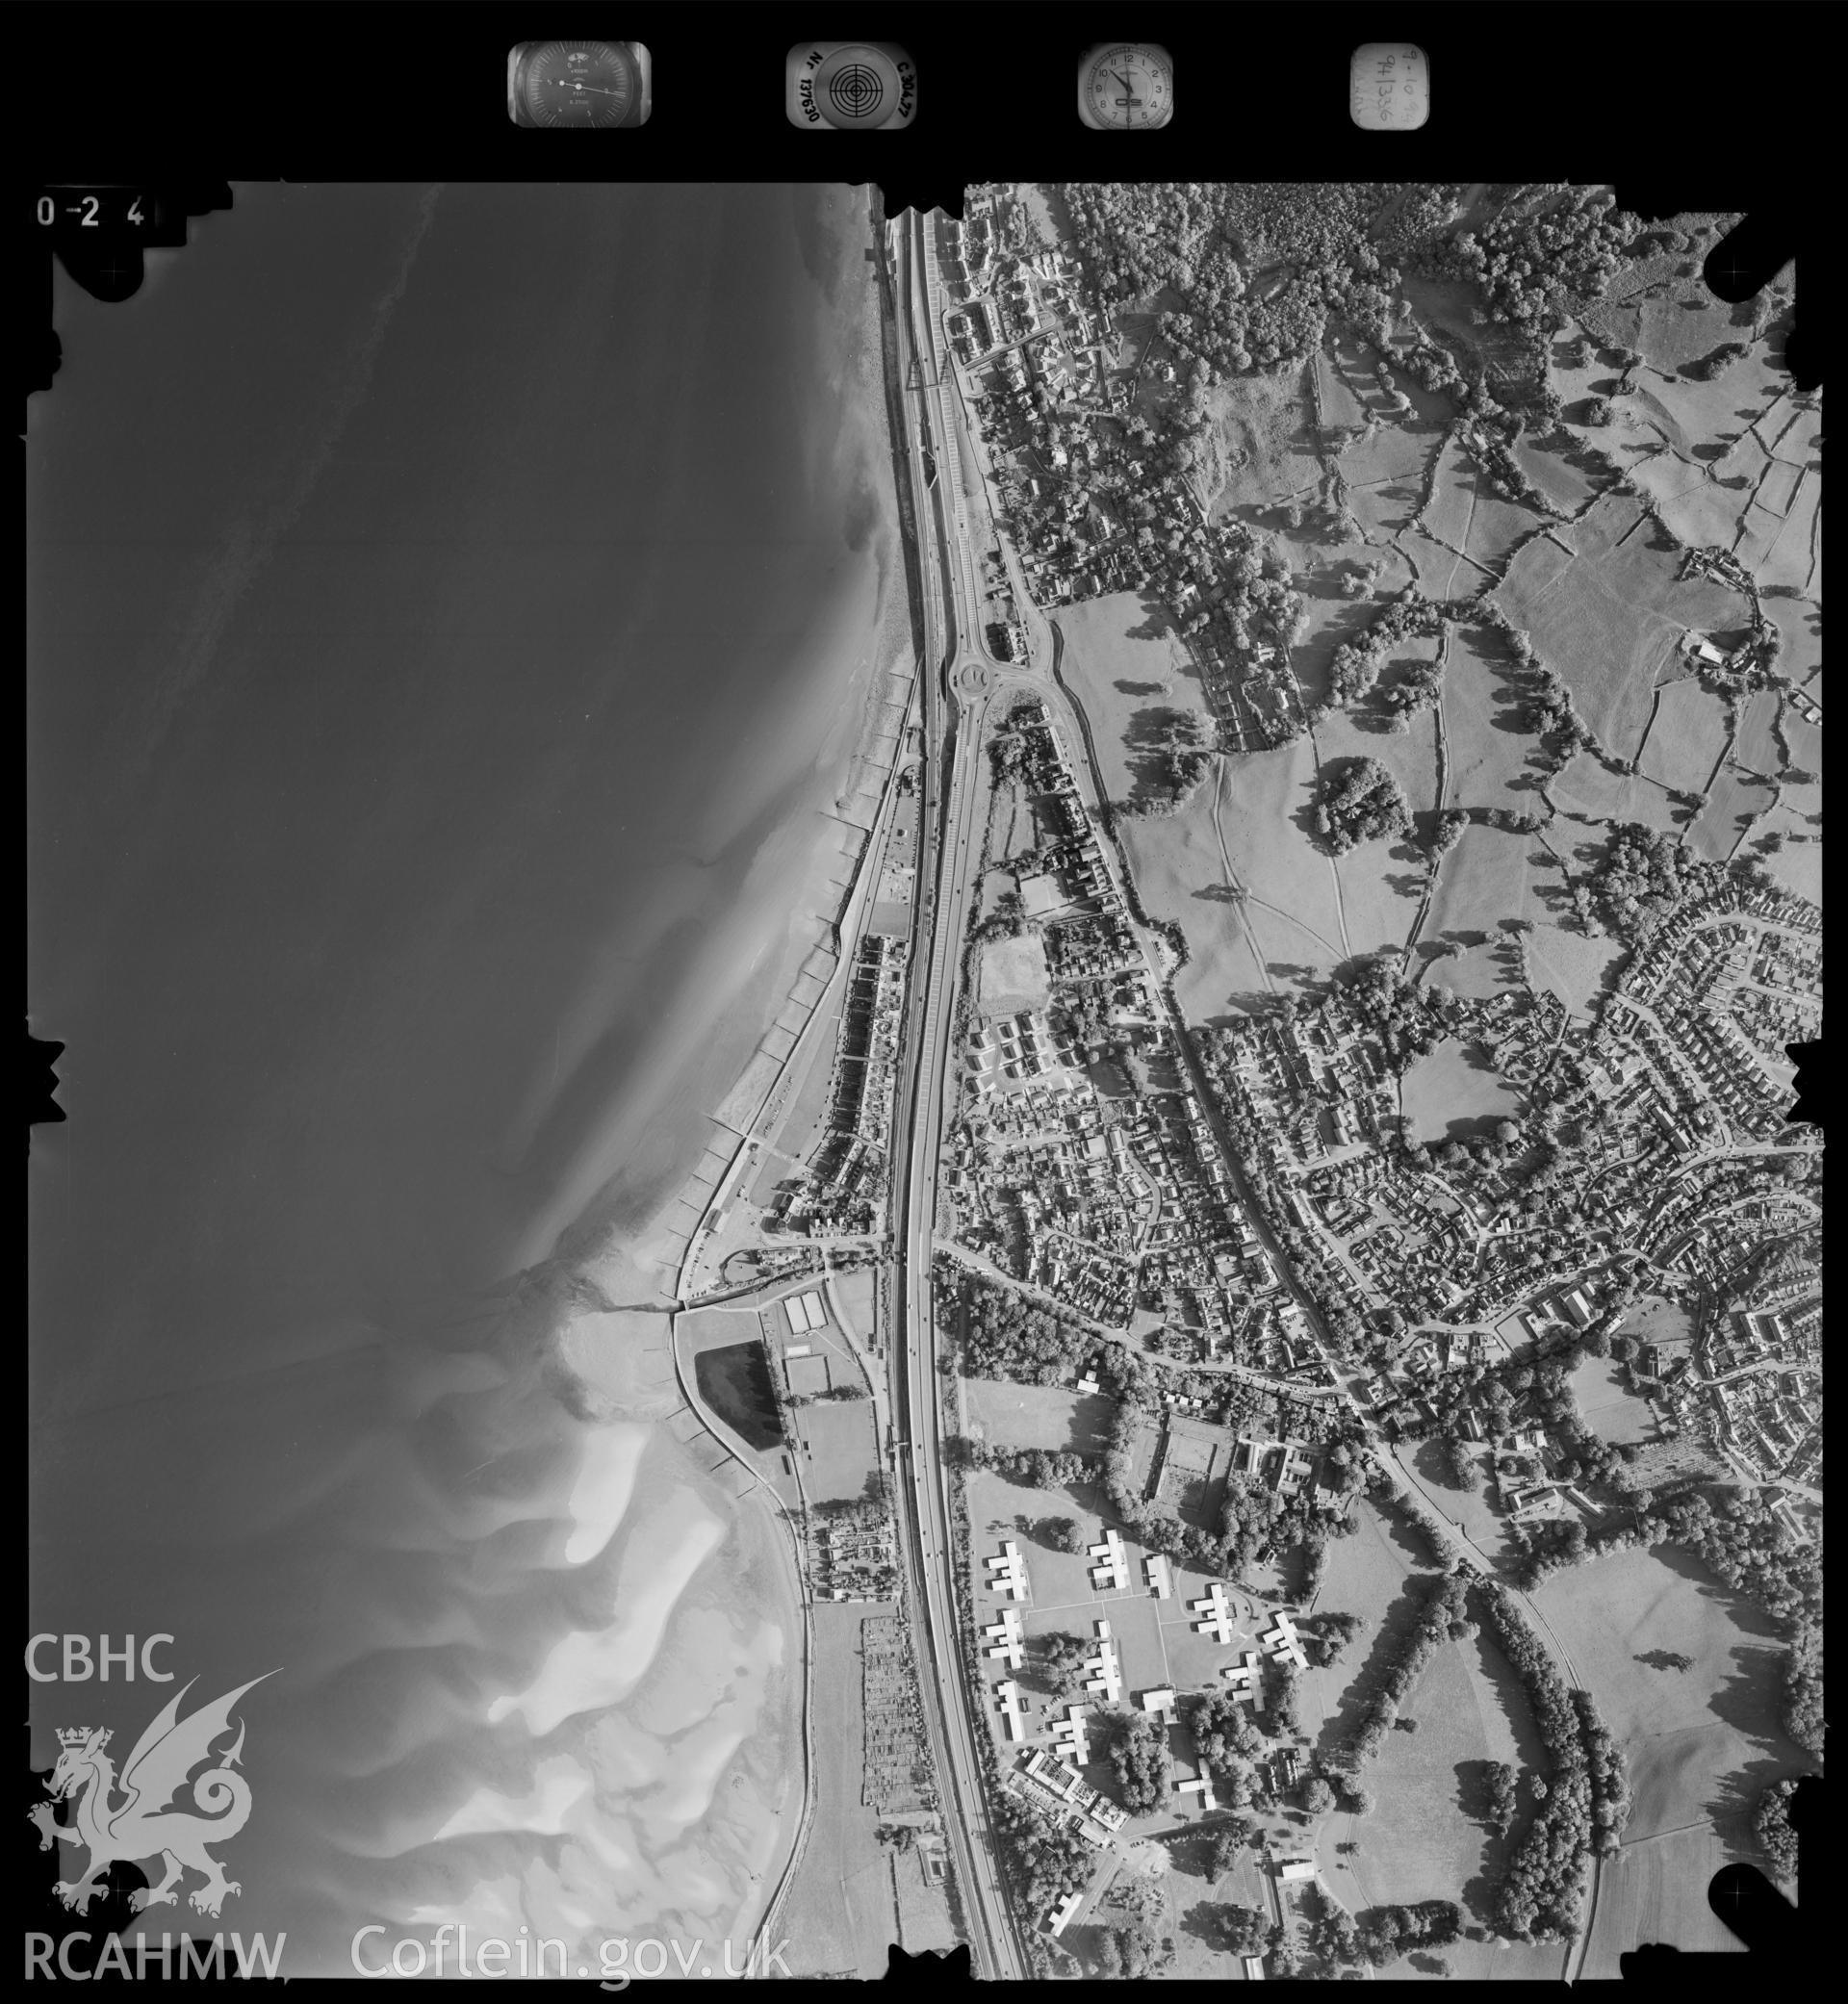 Digitized copy of an aerial photograph showing Llanfairfechan area, taken by Ordnance Survey, 1994.